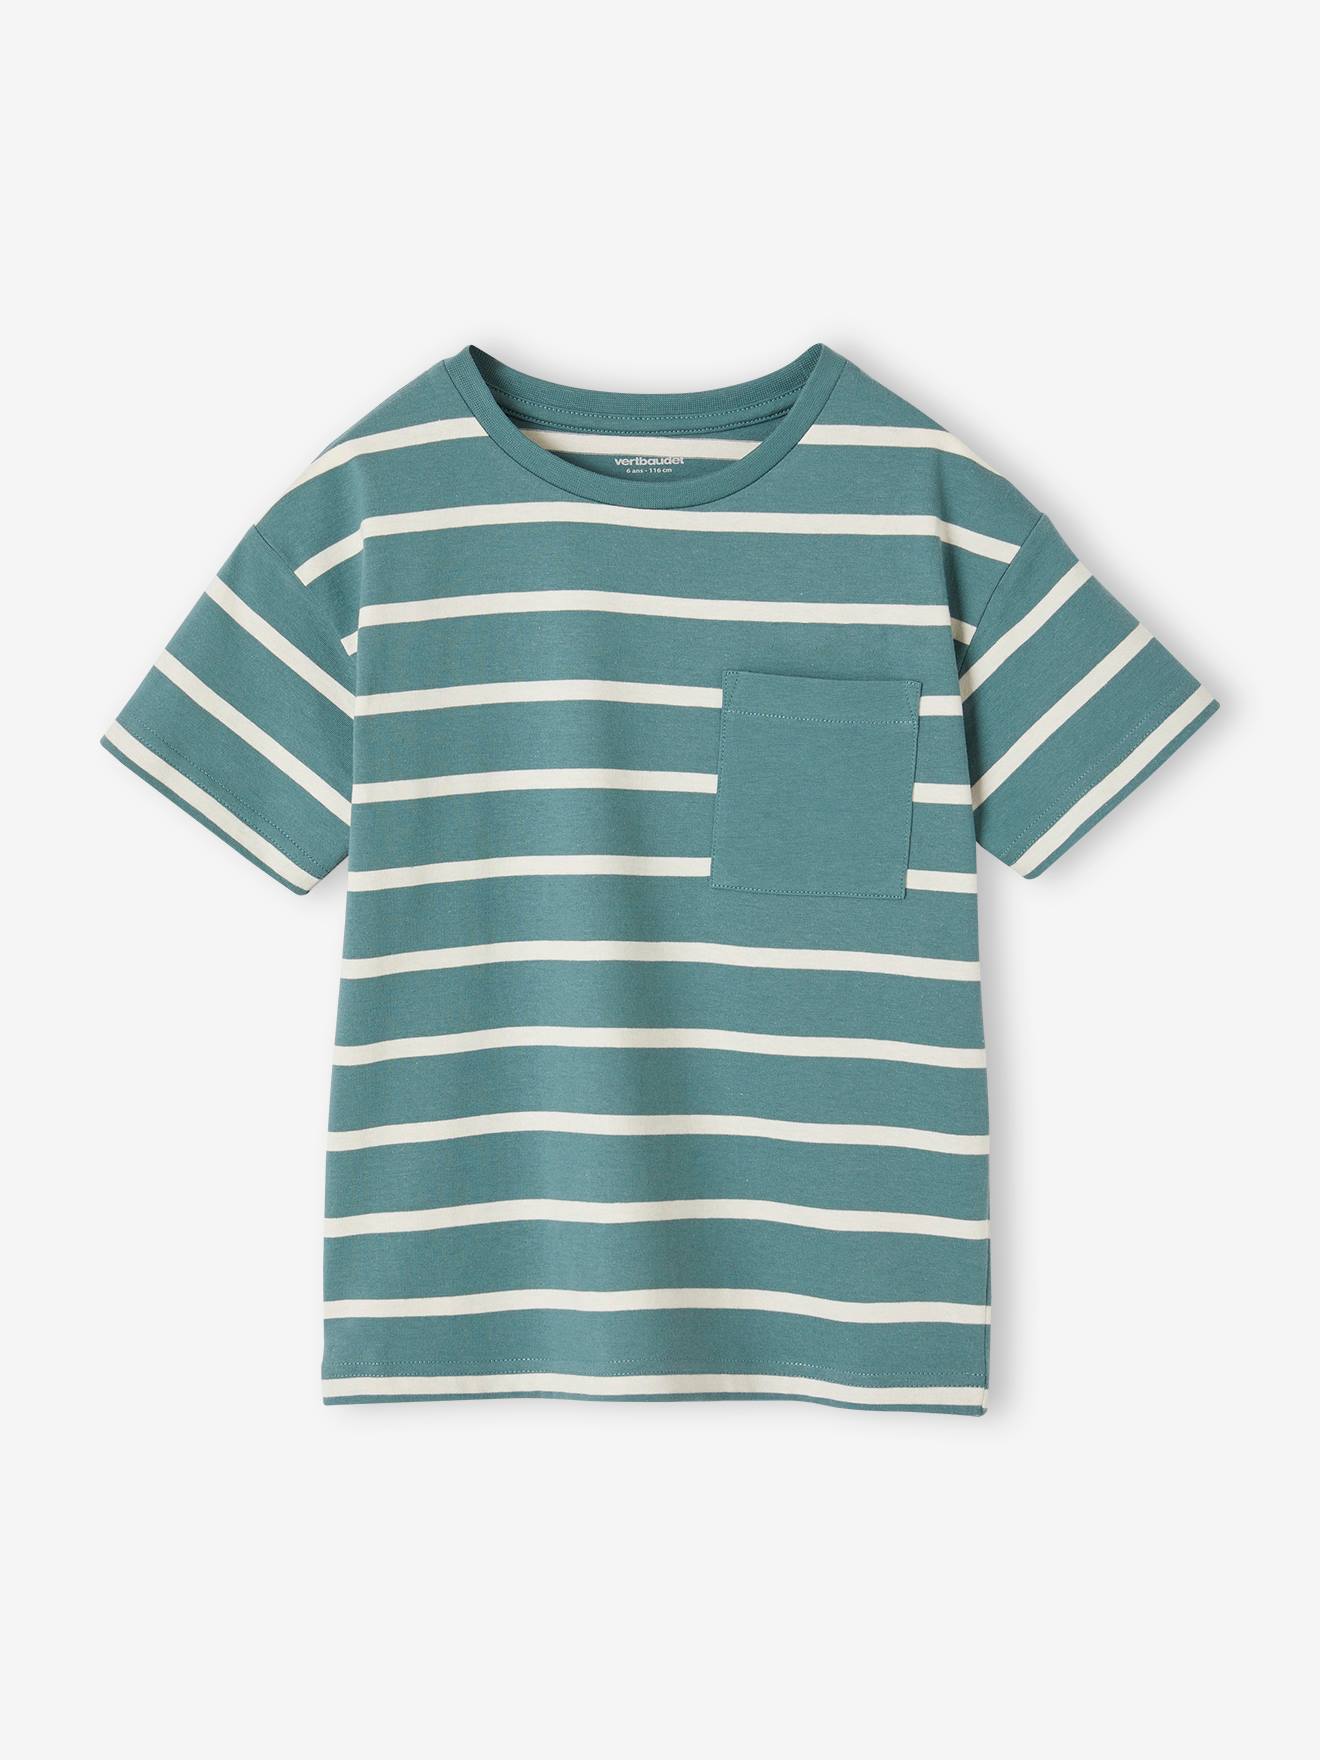 Striped T-Shirt for Boys aqua green